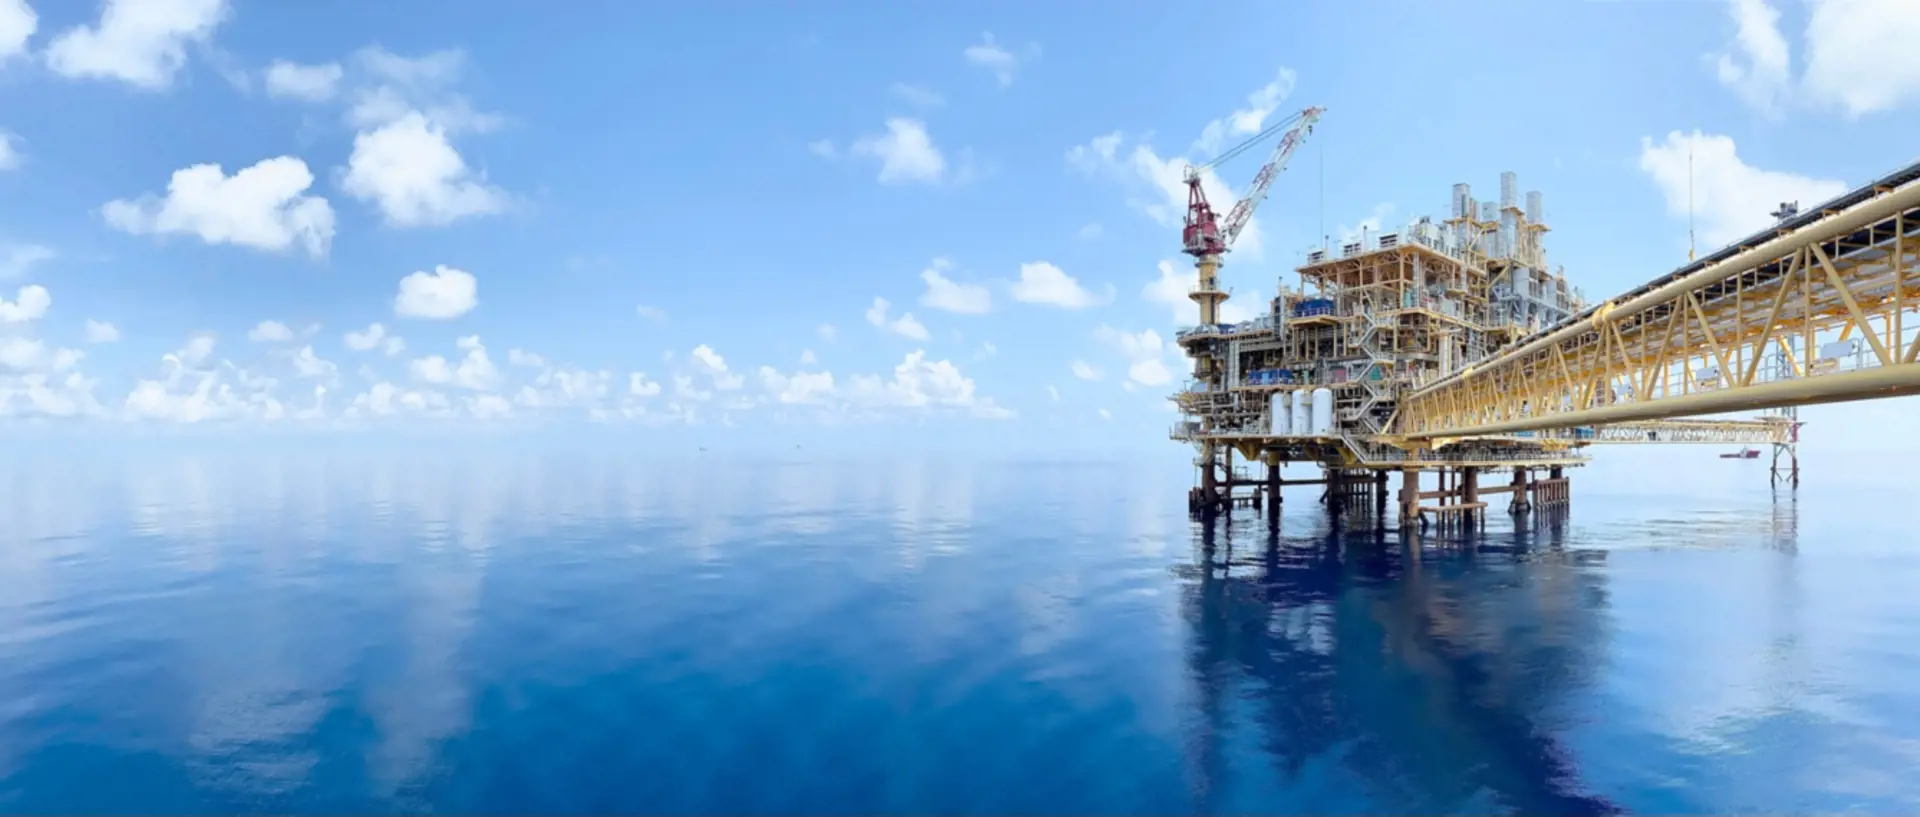 Öl Gas Plattform im Ozean